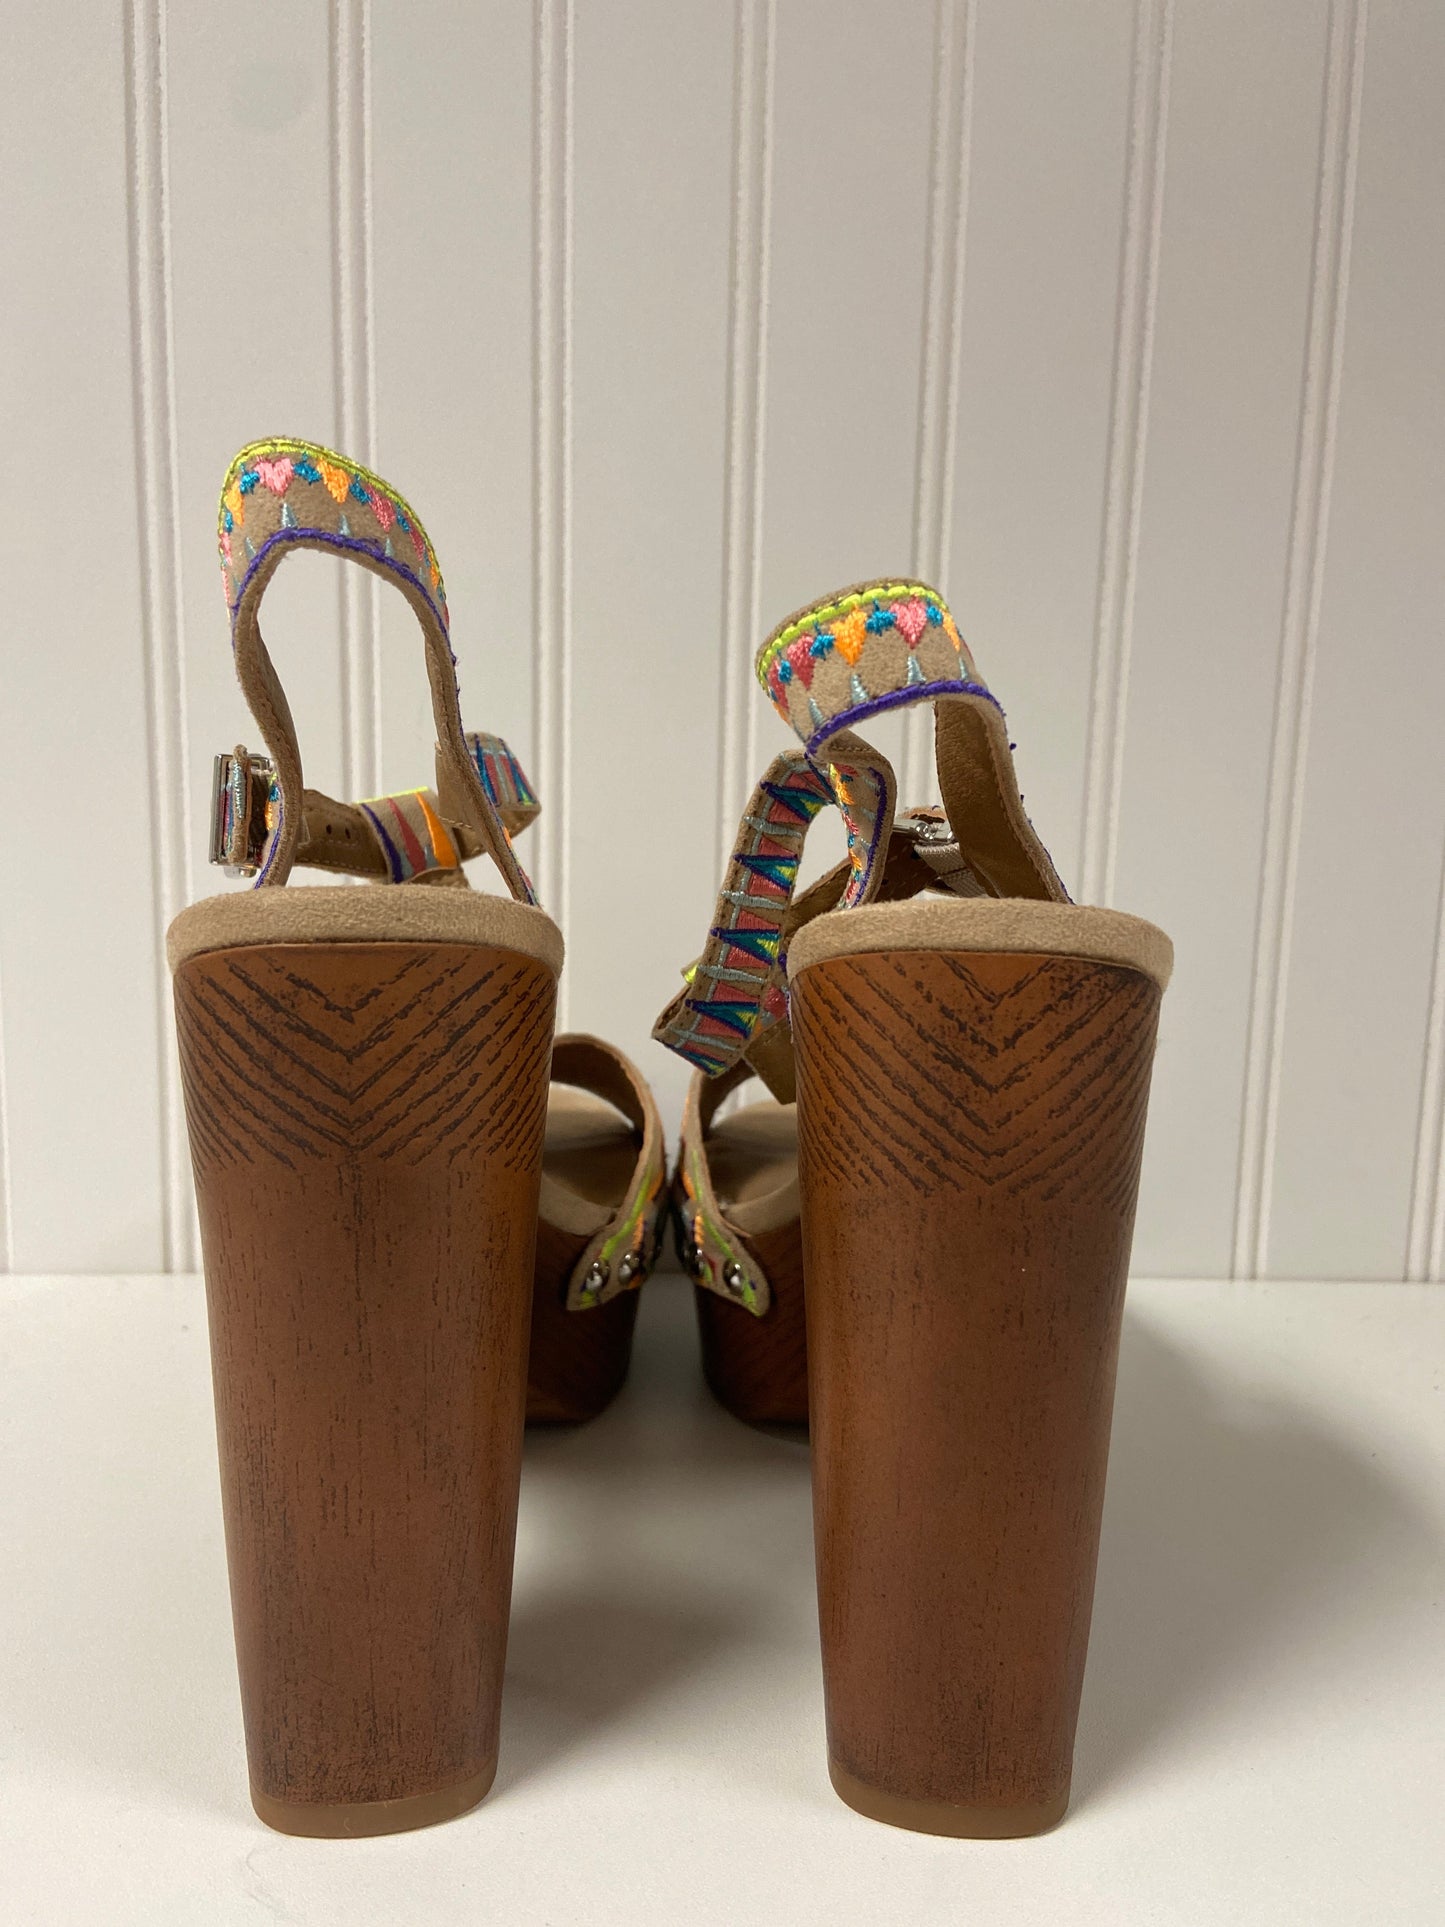 Shoes Heels Platform By Gianni Bini  Size: 8.5